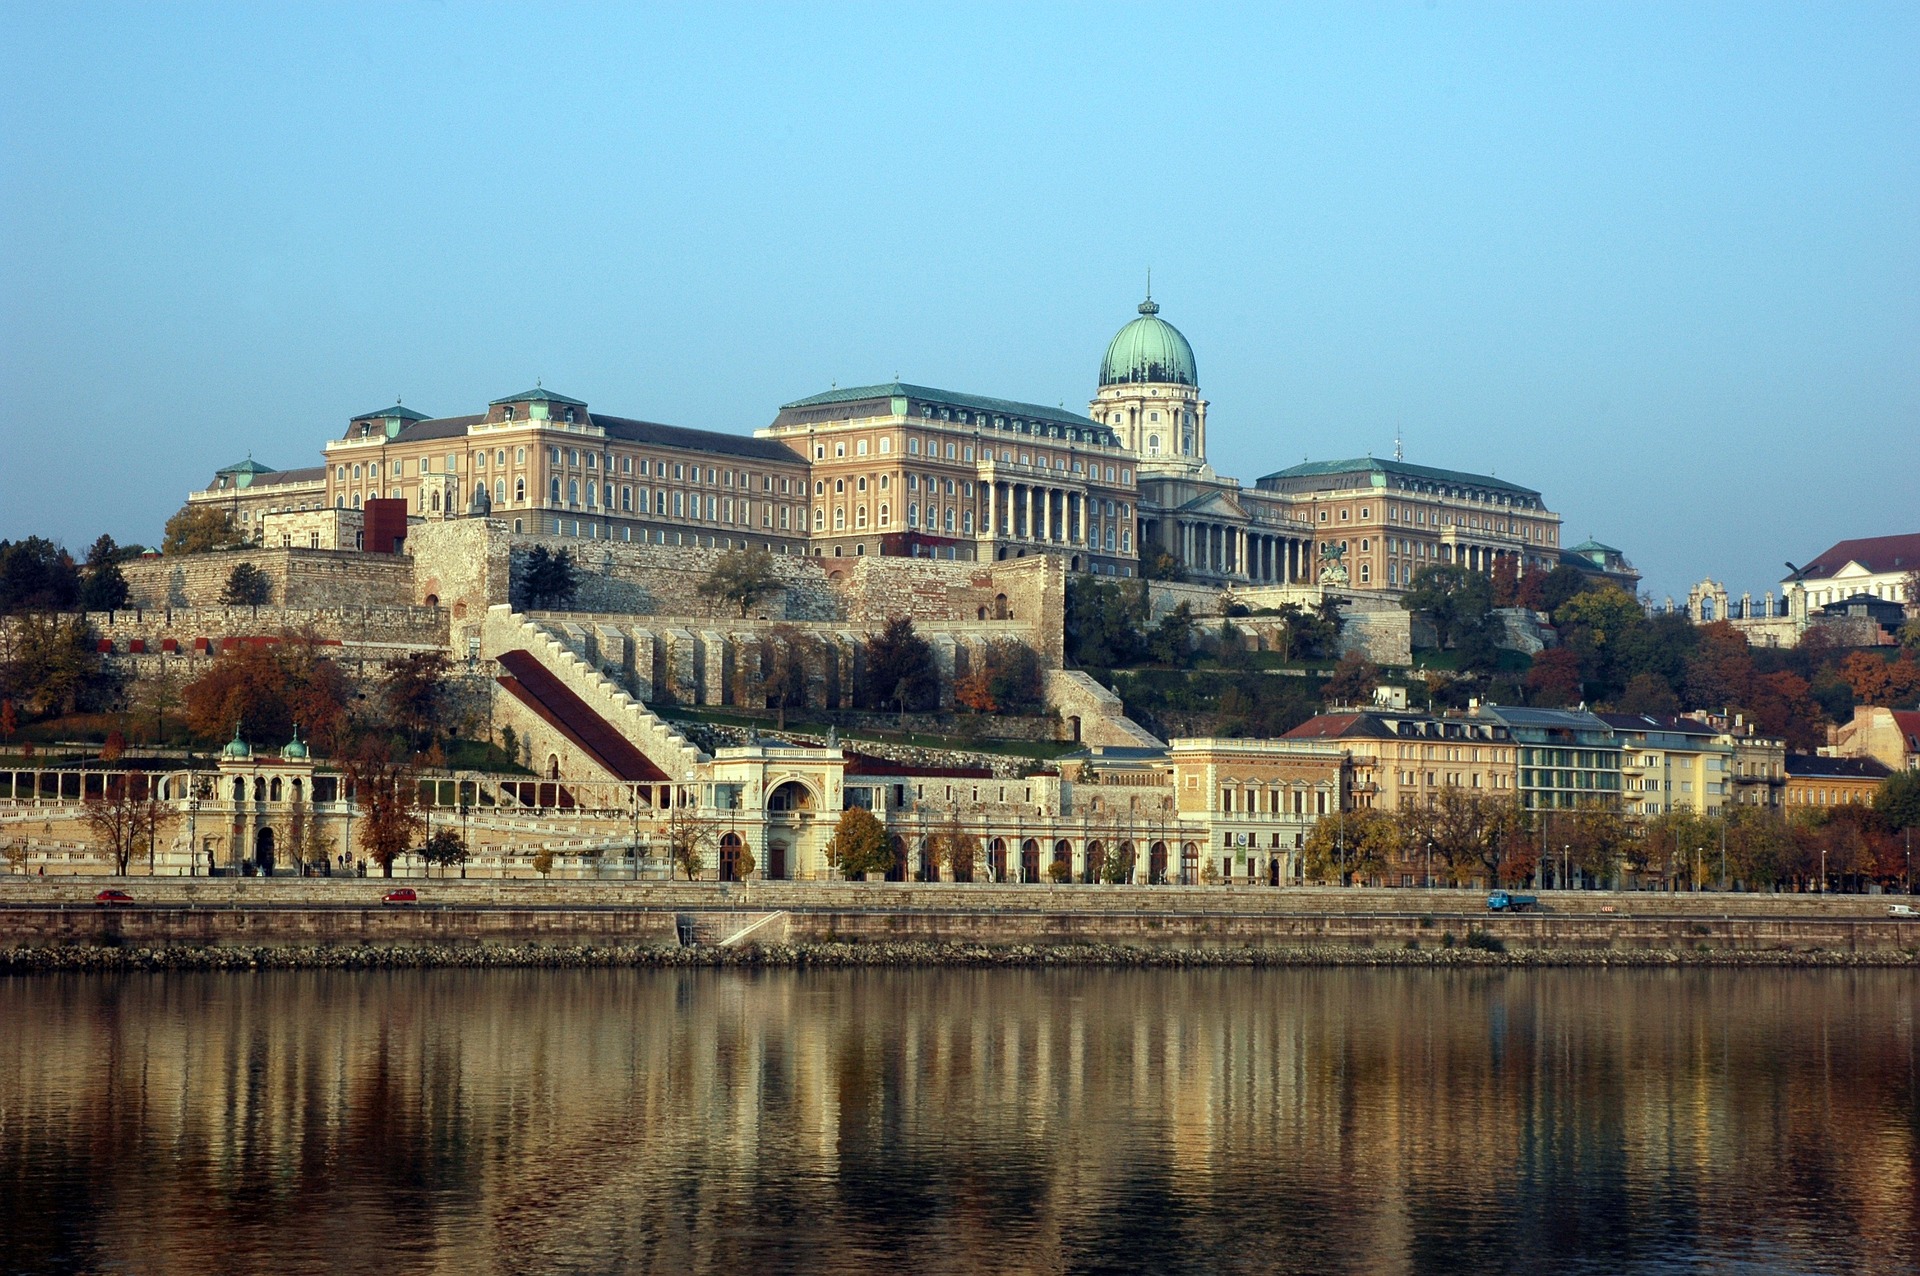 Budapest - image by janosvirag @ pixabay.com